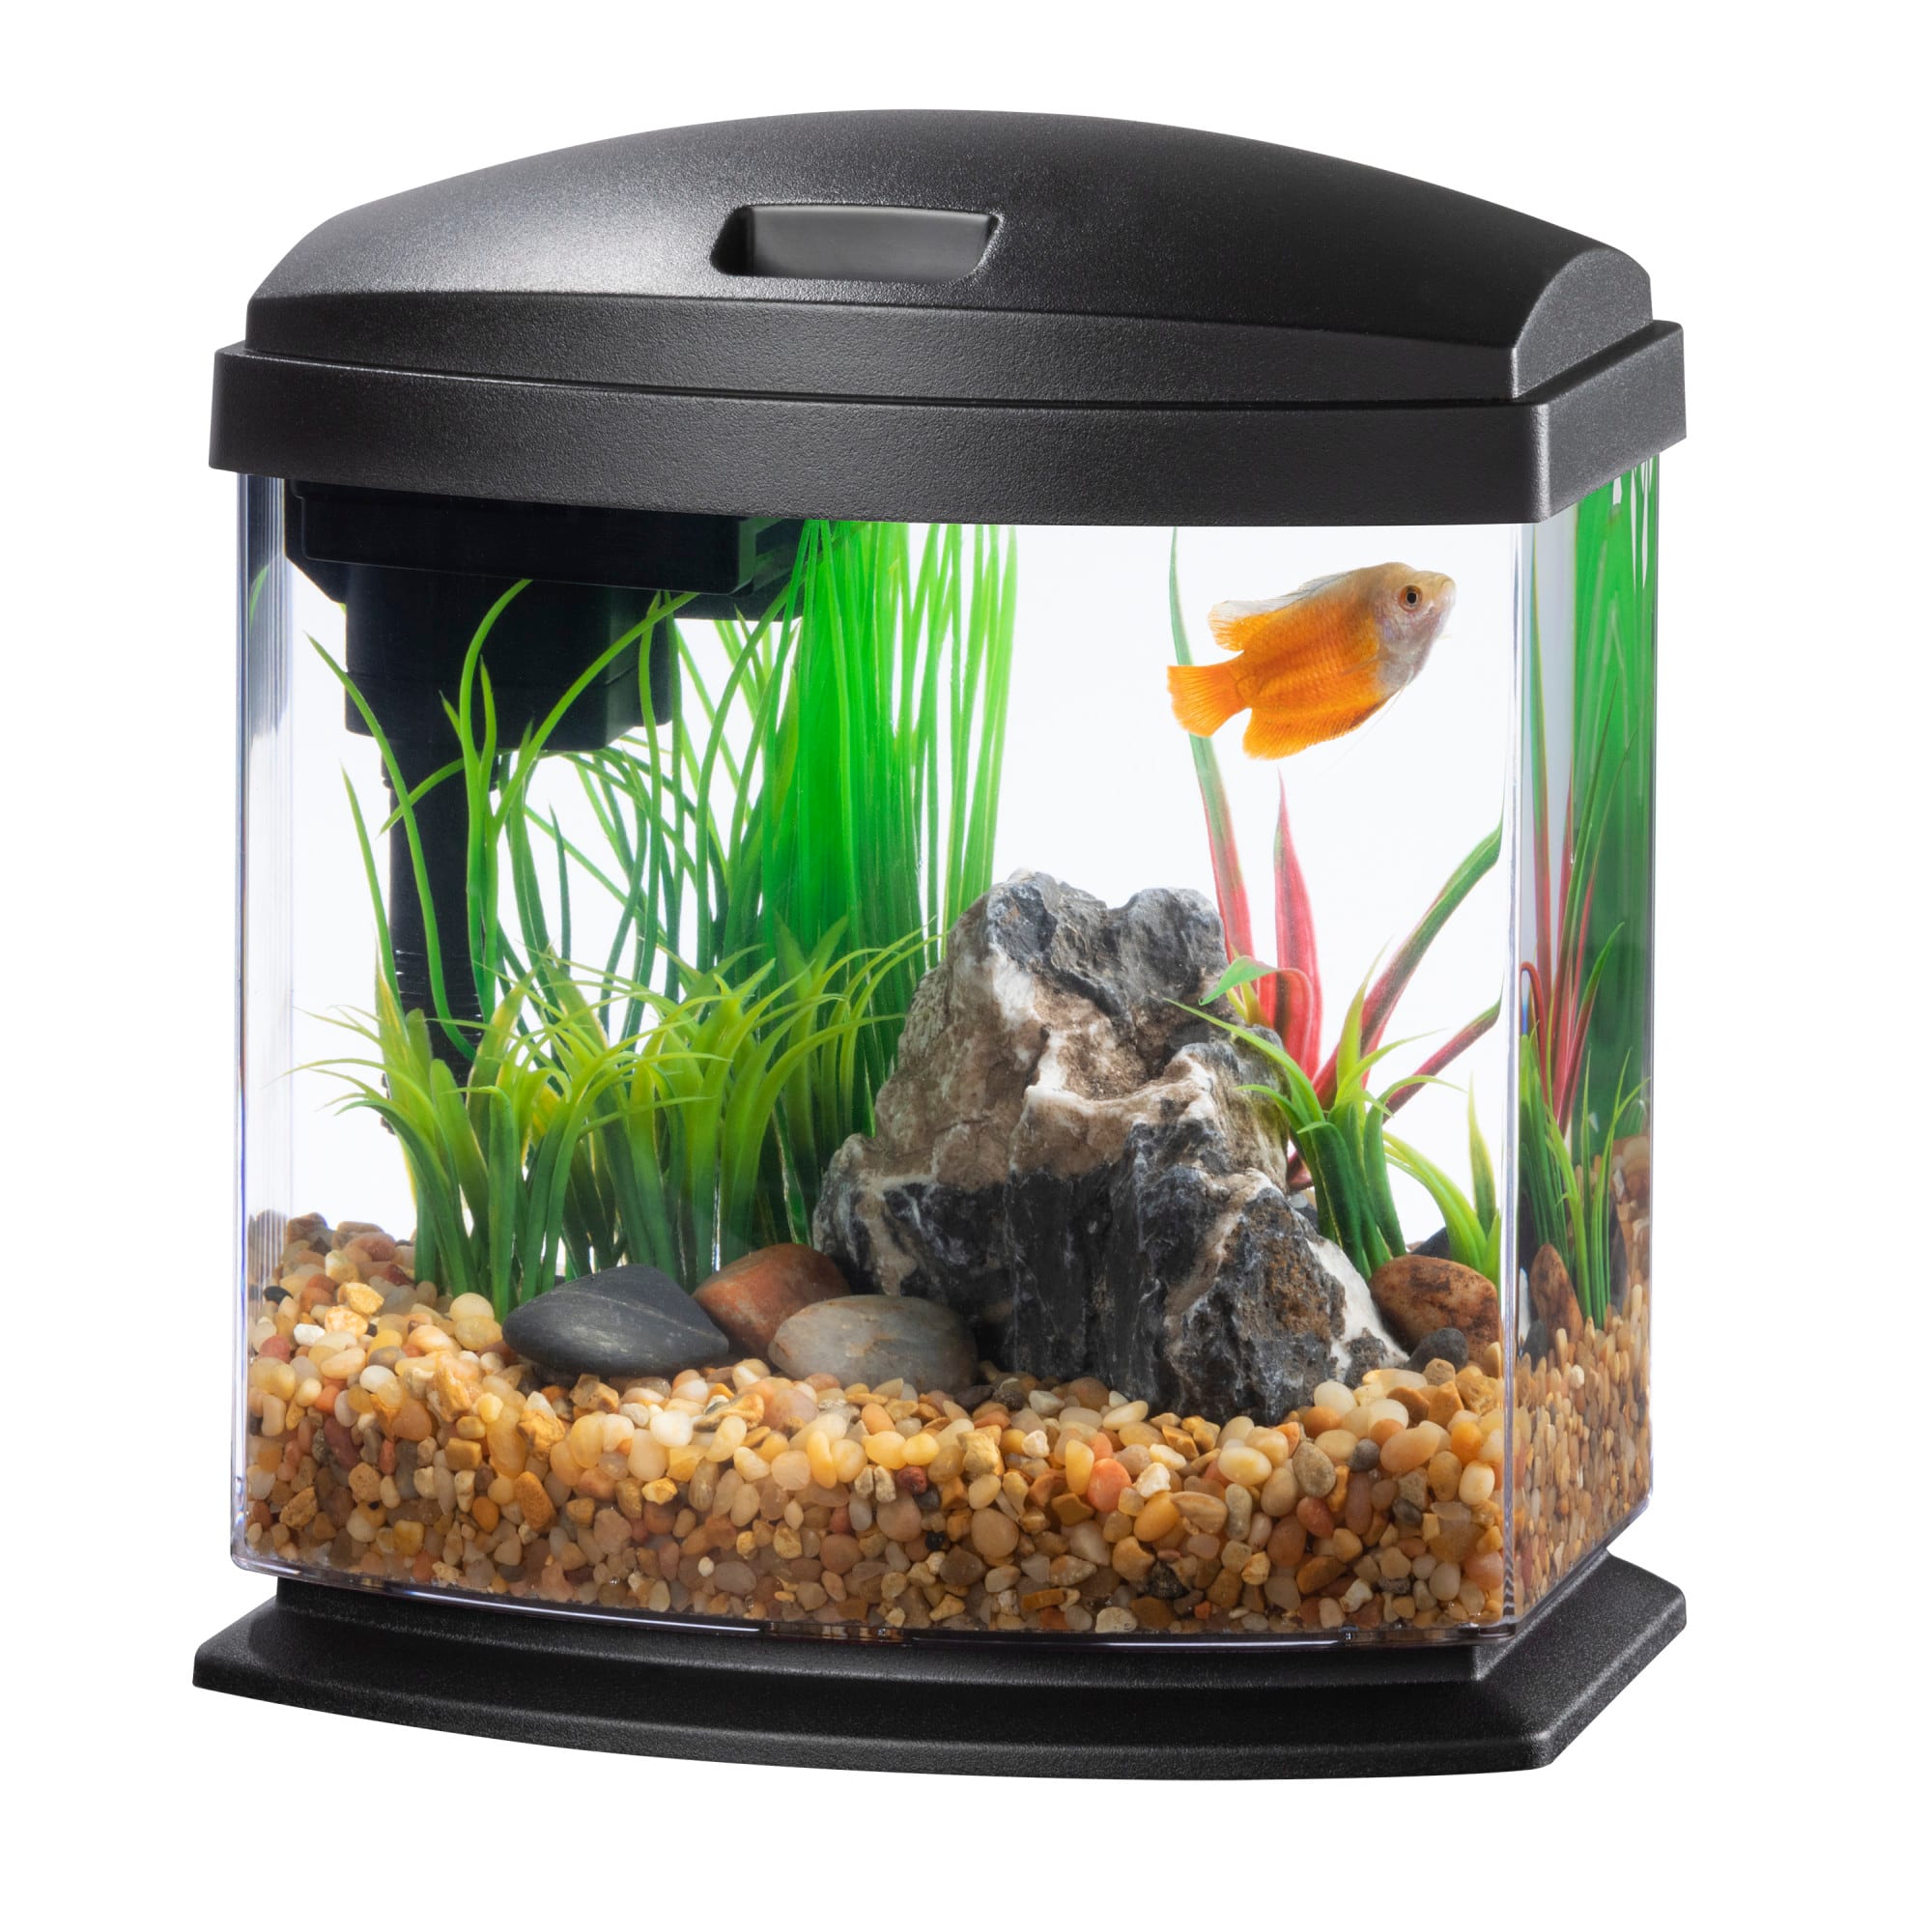 Aqueon LED MiniBow 2.5 SmartClean Aquarium Kit Black - 2.5 Gallon